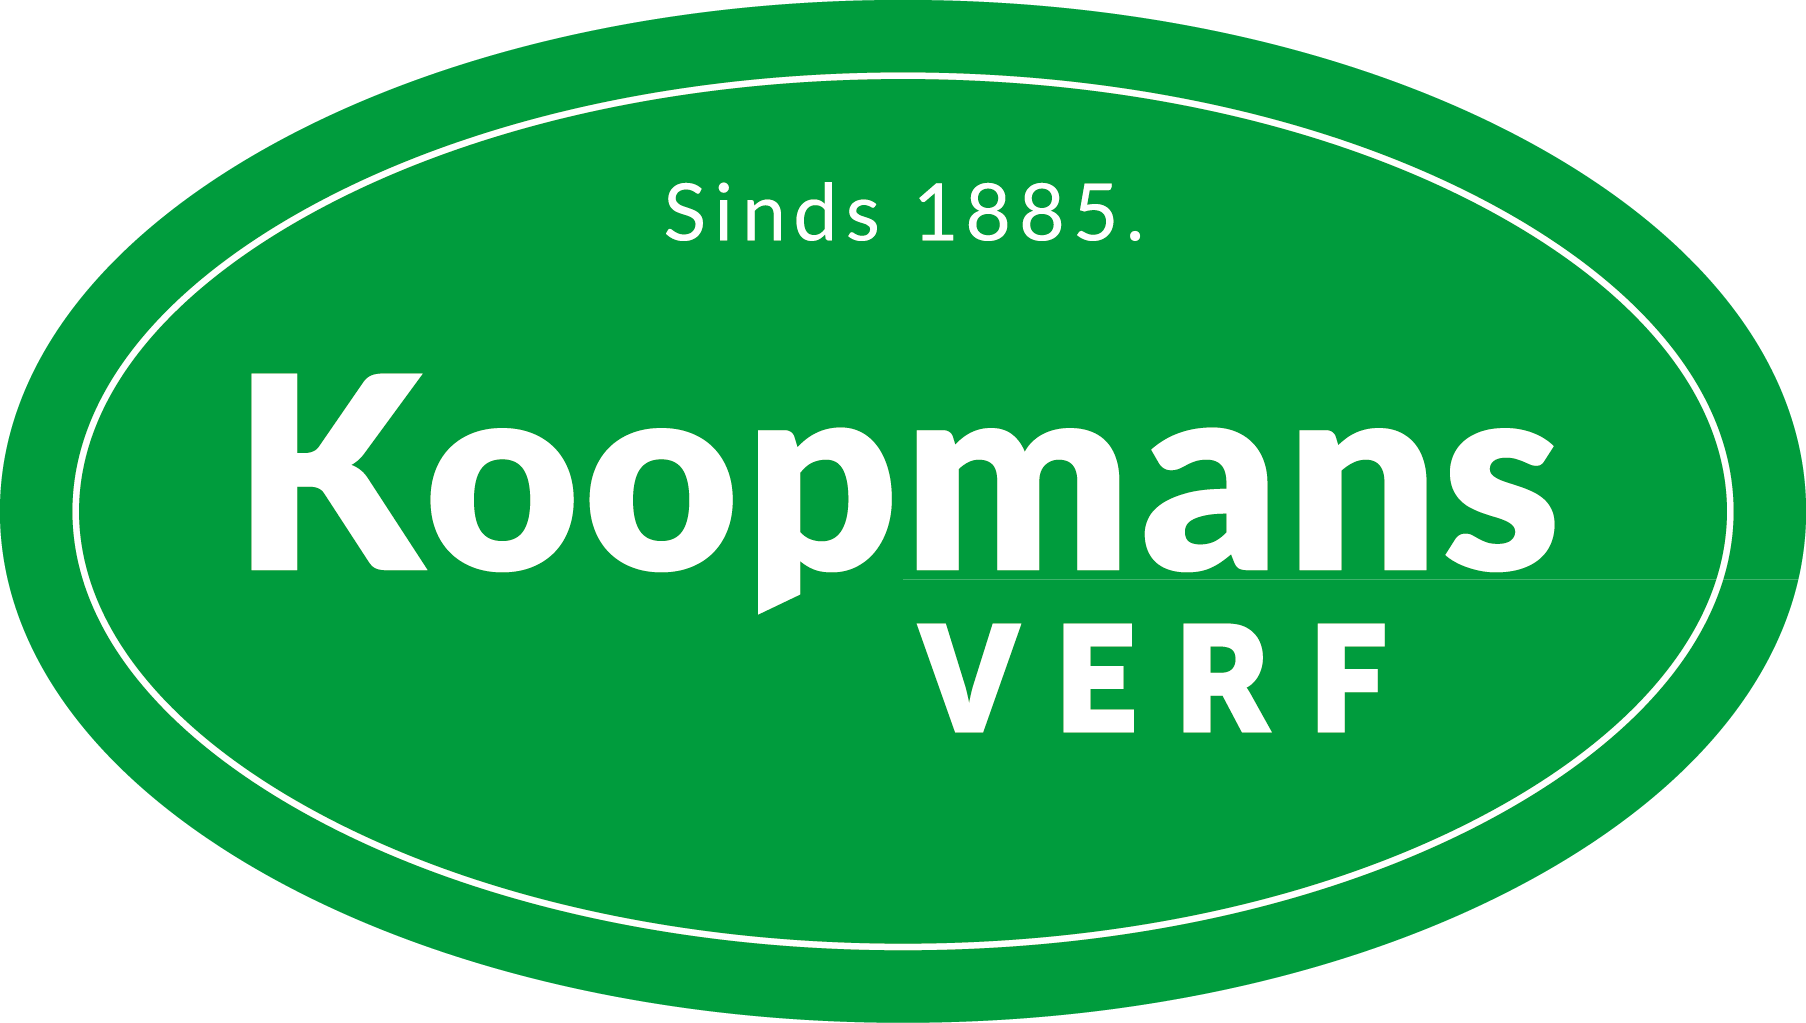 Koopmansverfshop.nl - Complete en officiële Koopmans verf winkel.